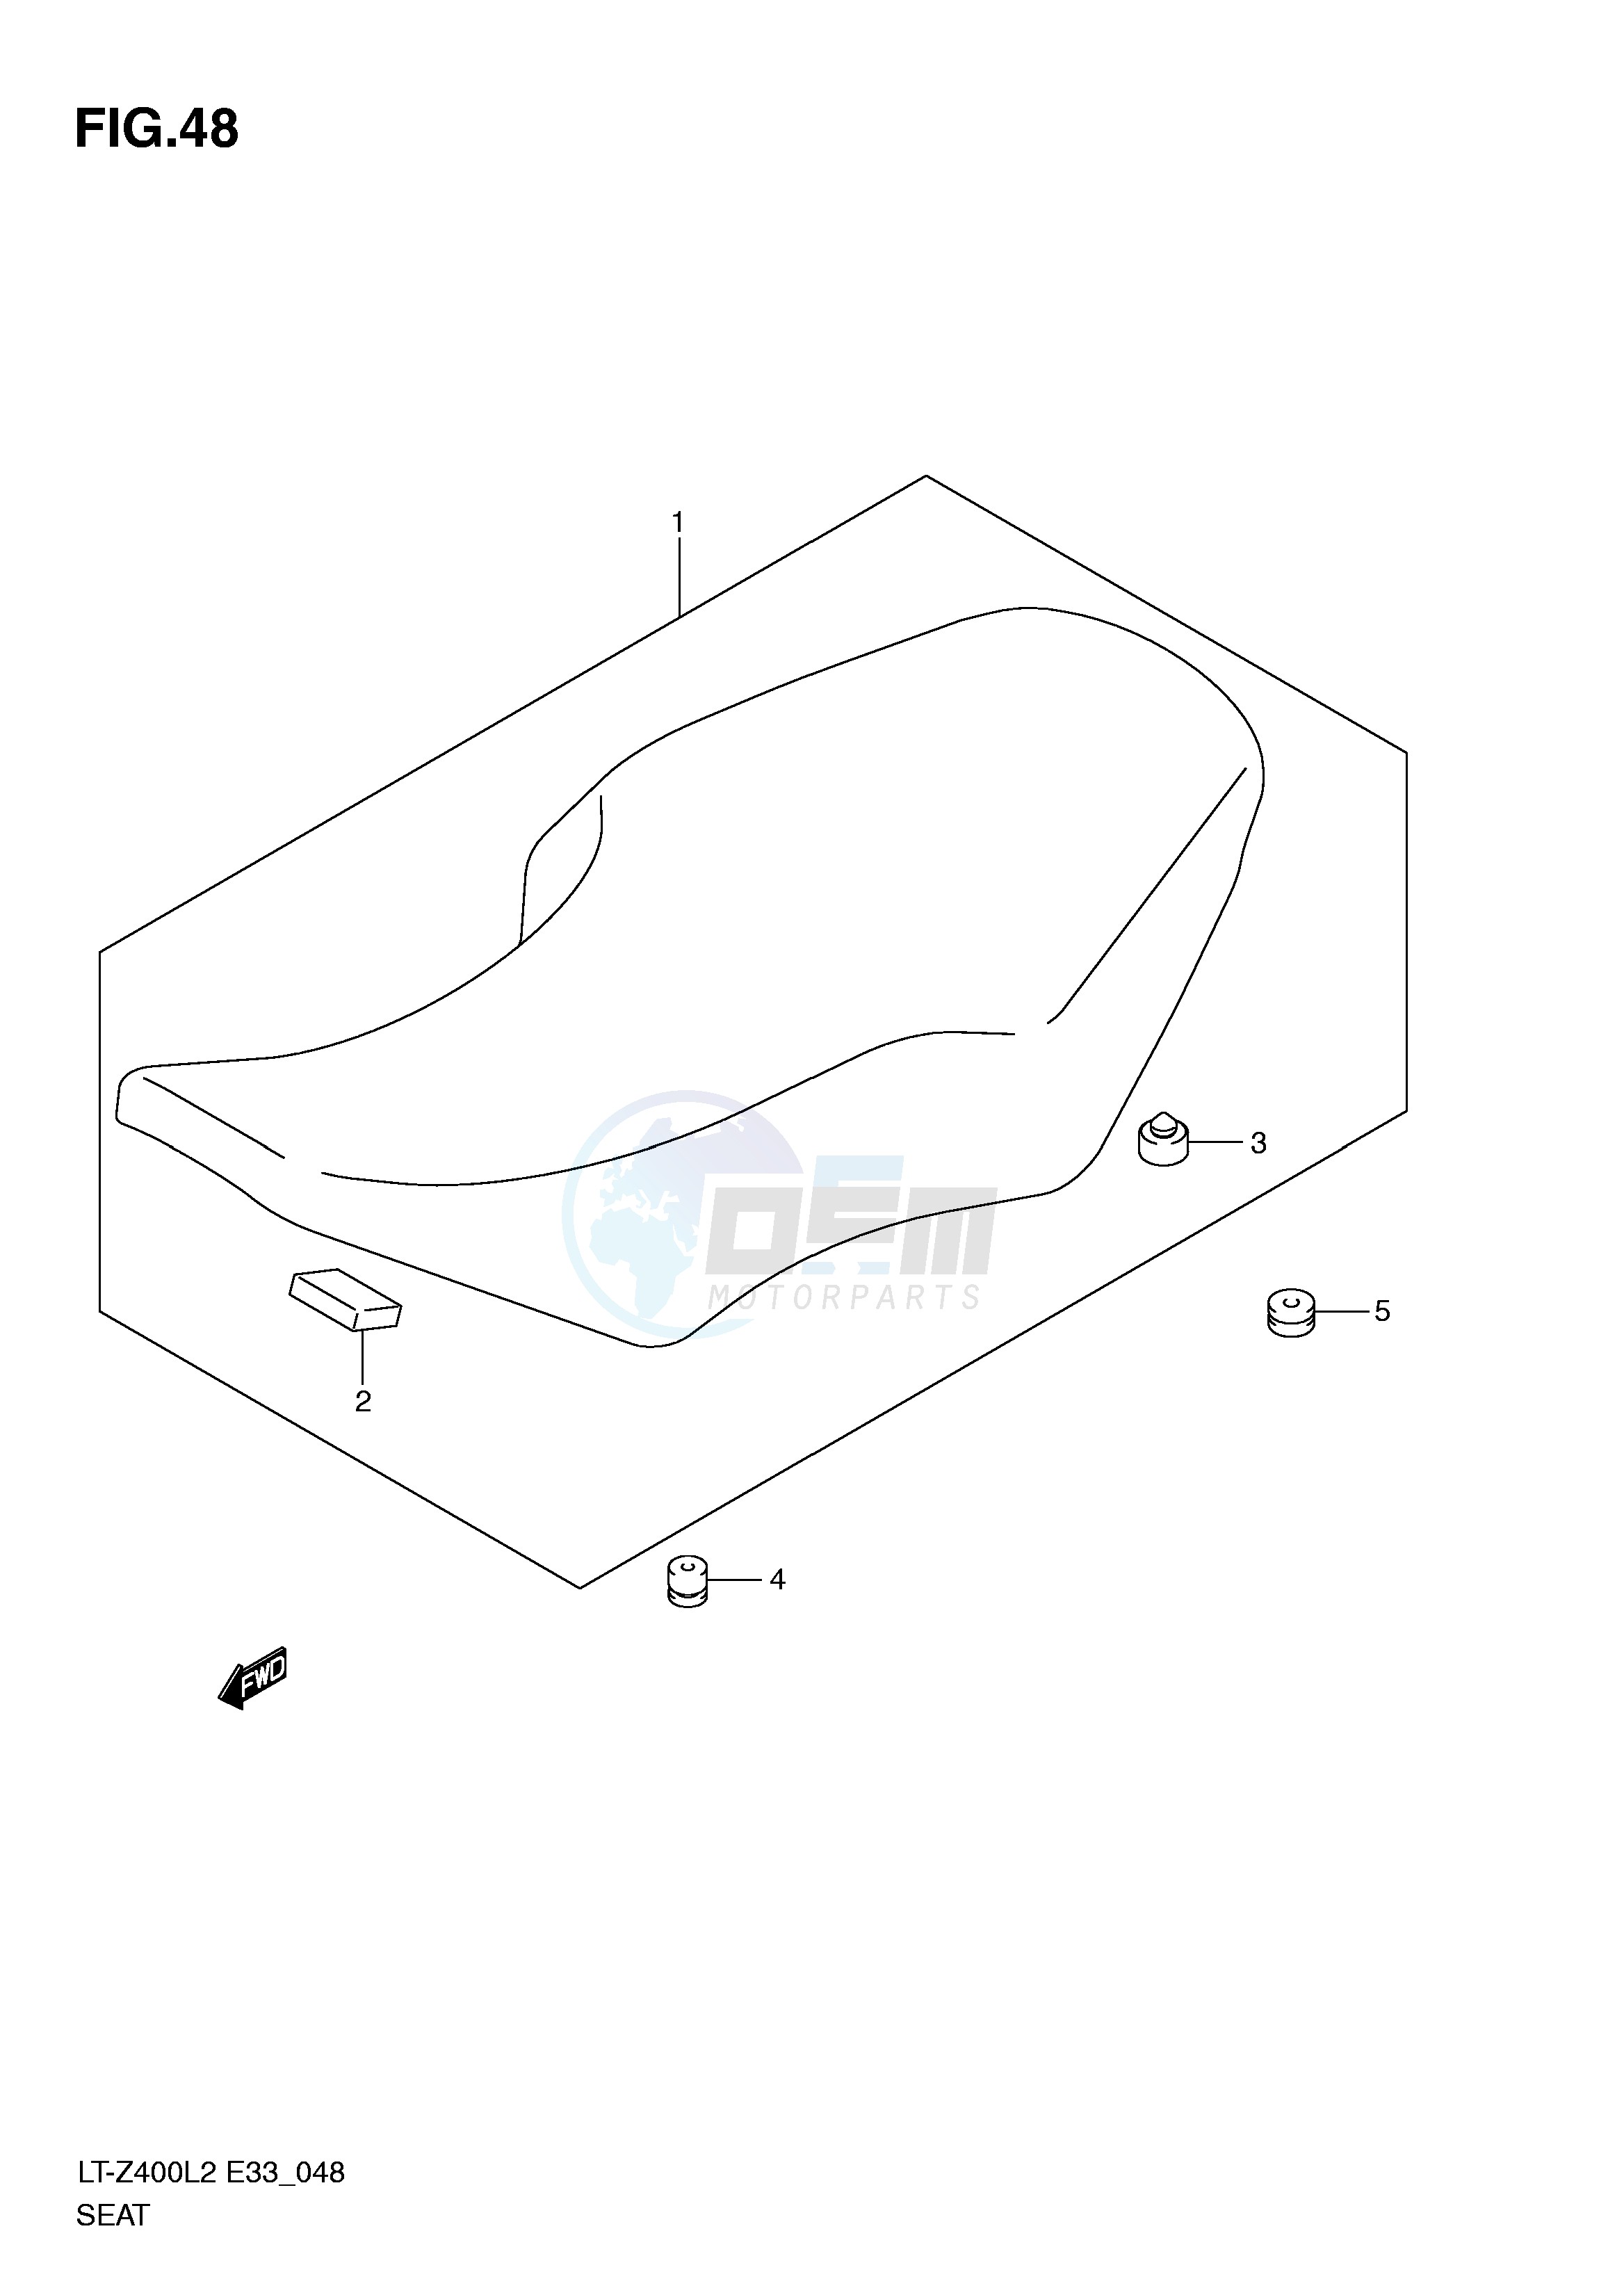 SEAT (LT-Z400ZL2 E33) blueprint